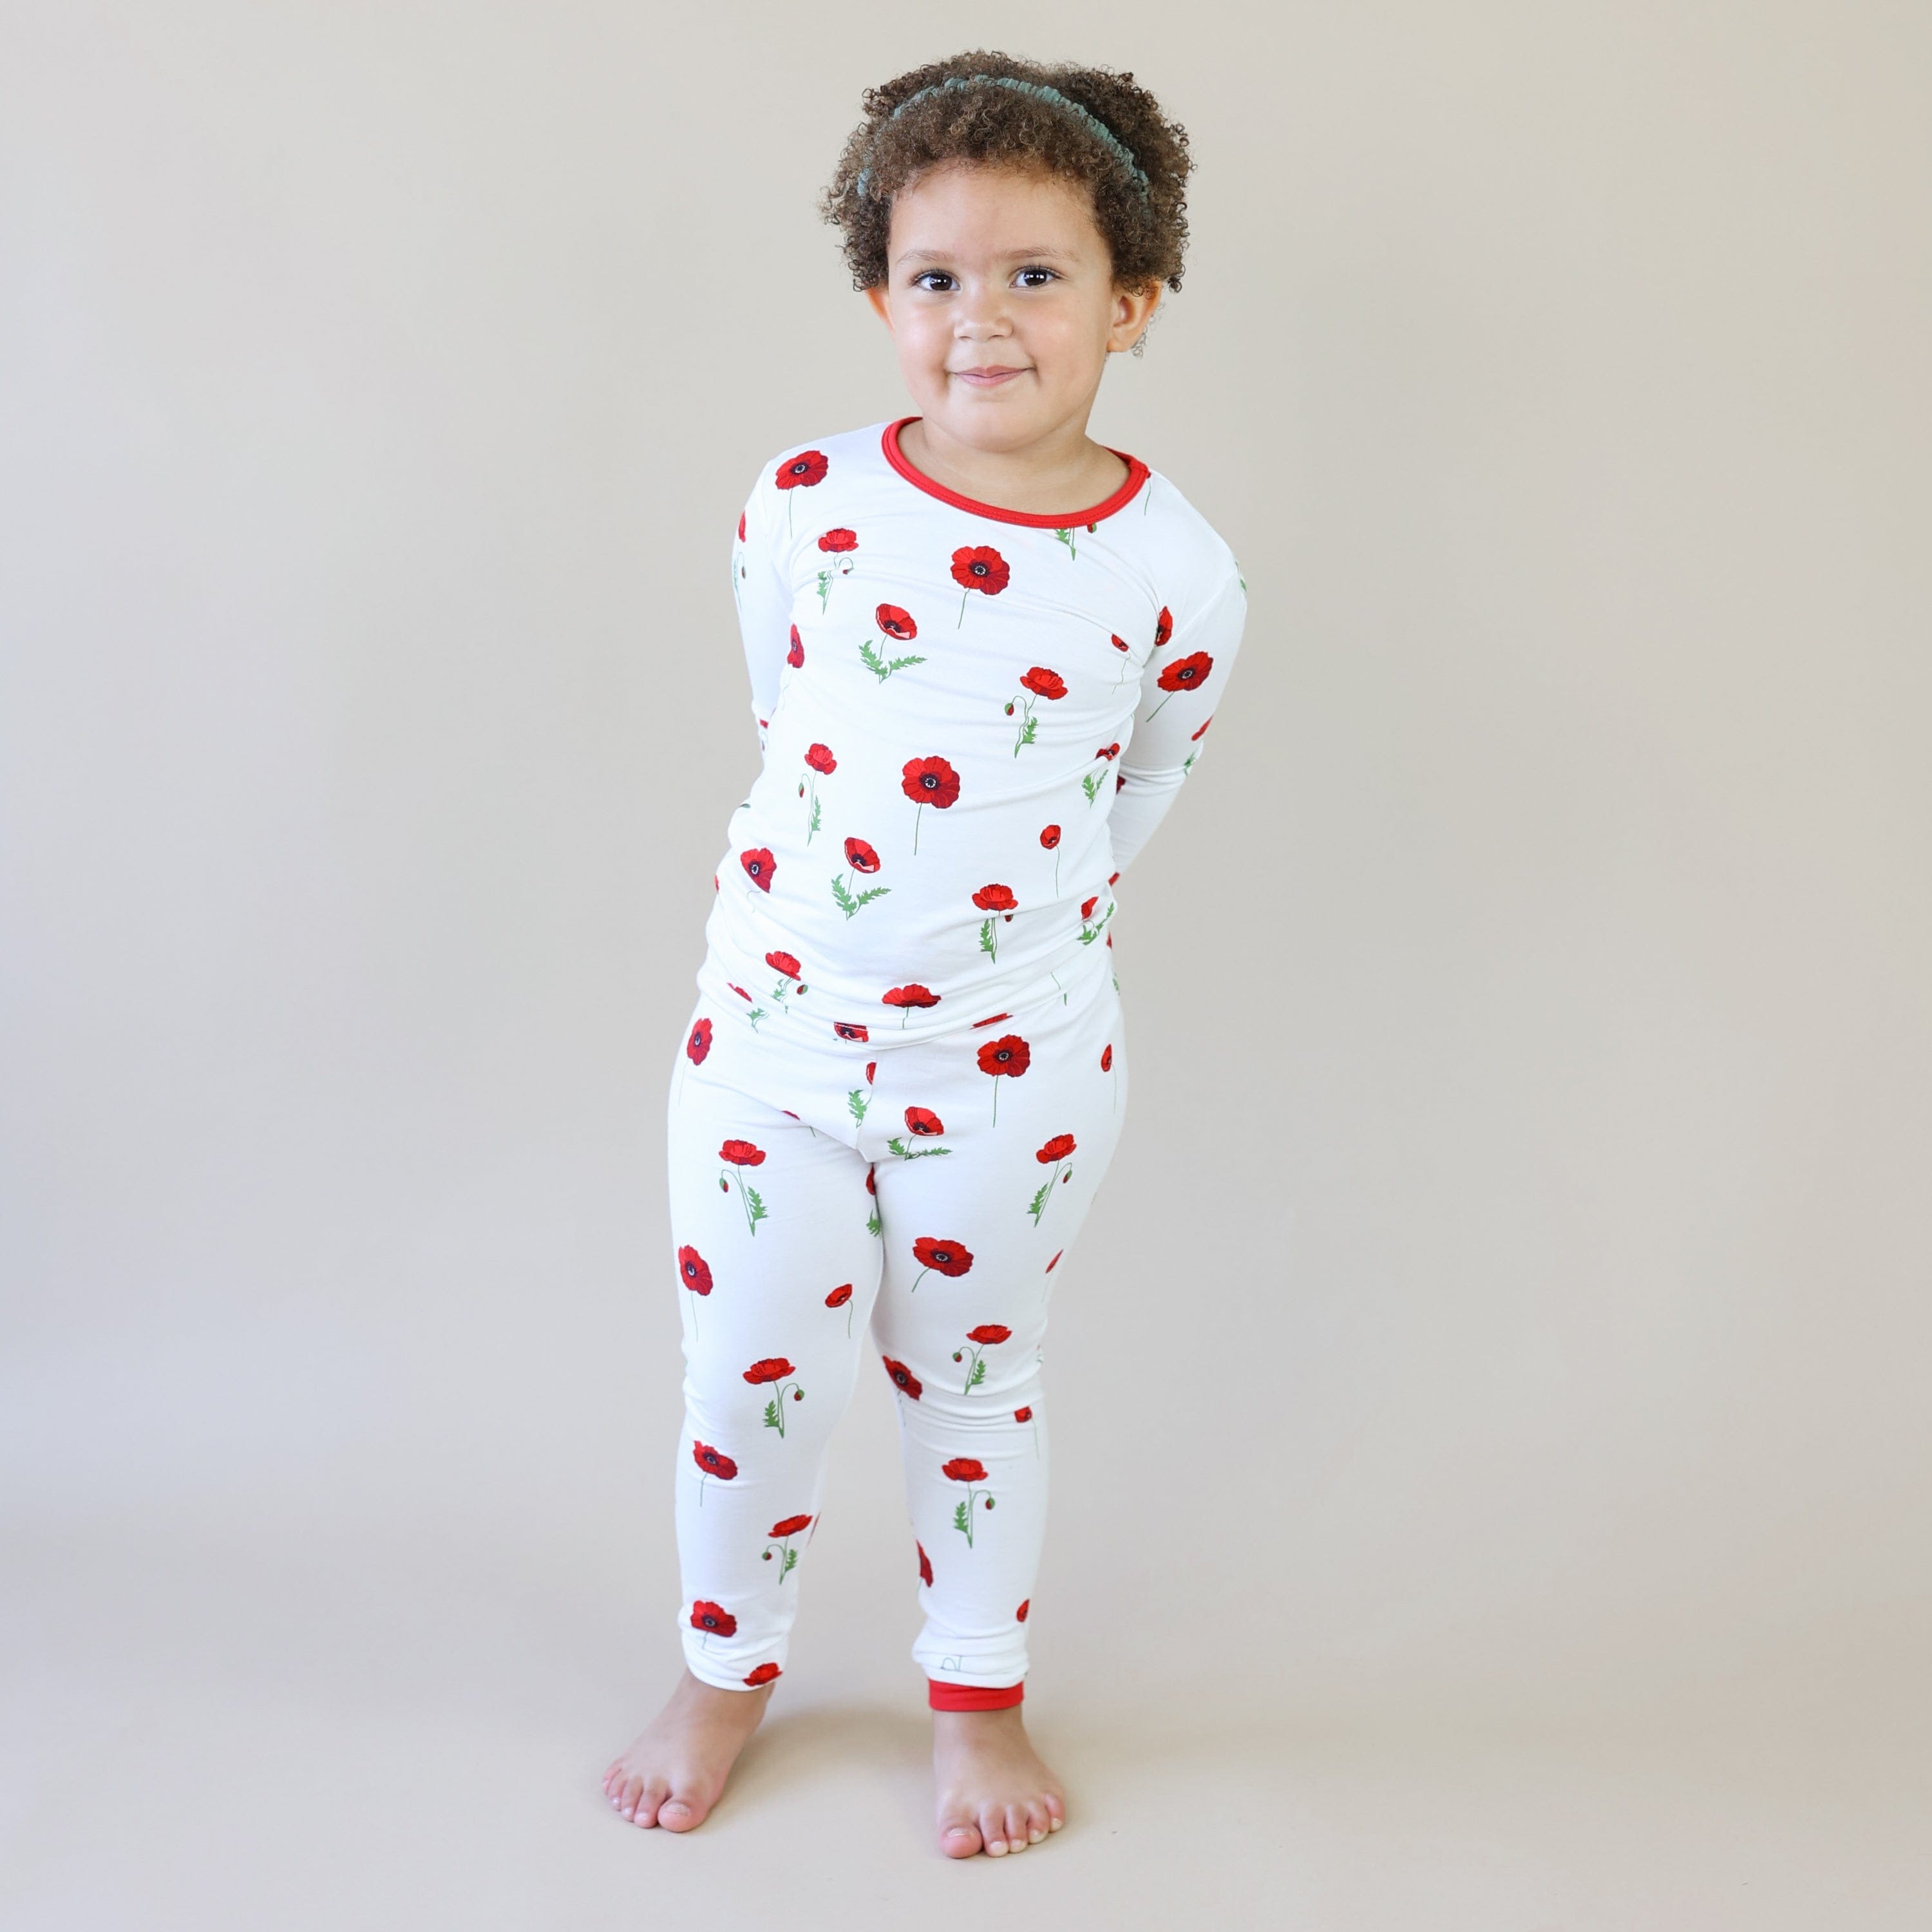 Child wearing Kyte Baby Long Sleeve Pajamas in Cloud Poppies